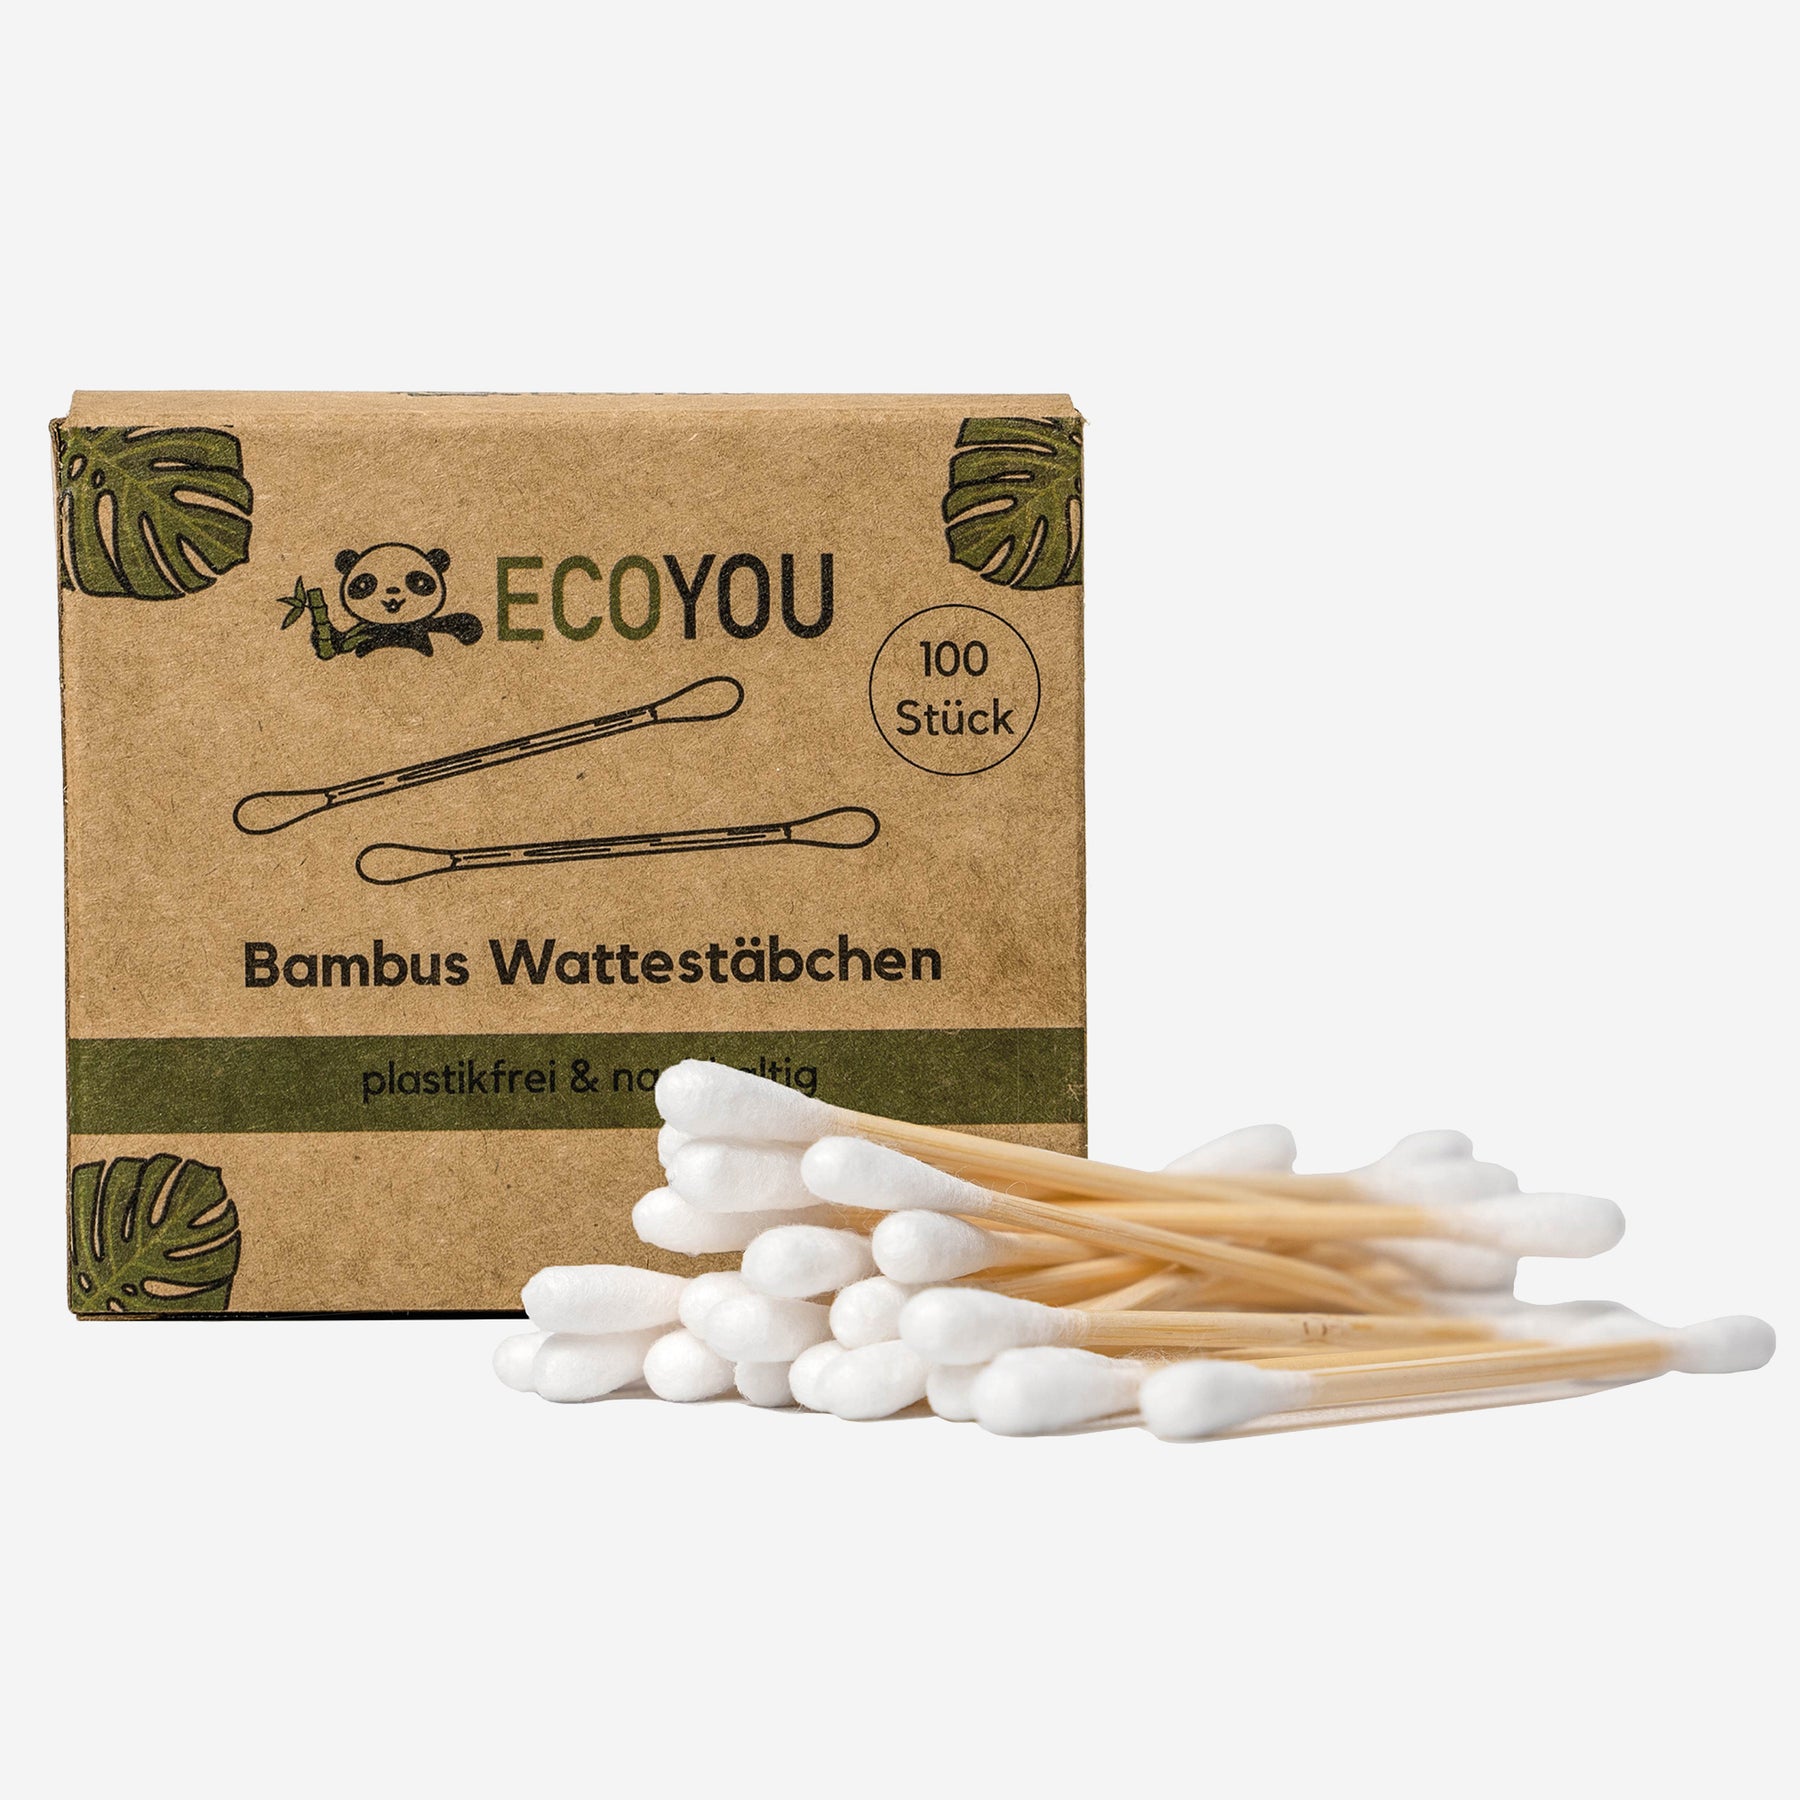 Bambus Wattestäbchen - 100 Stück - EcoYou